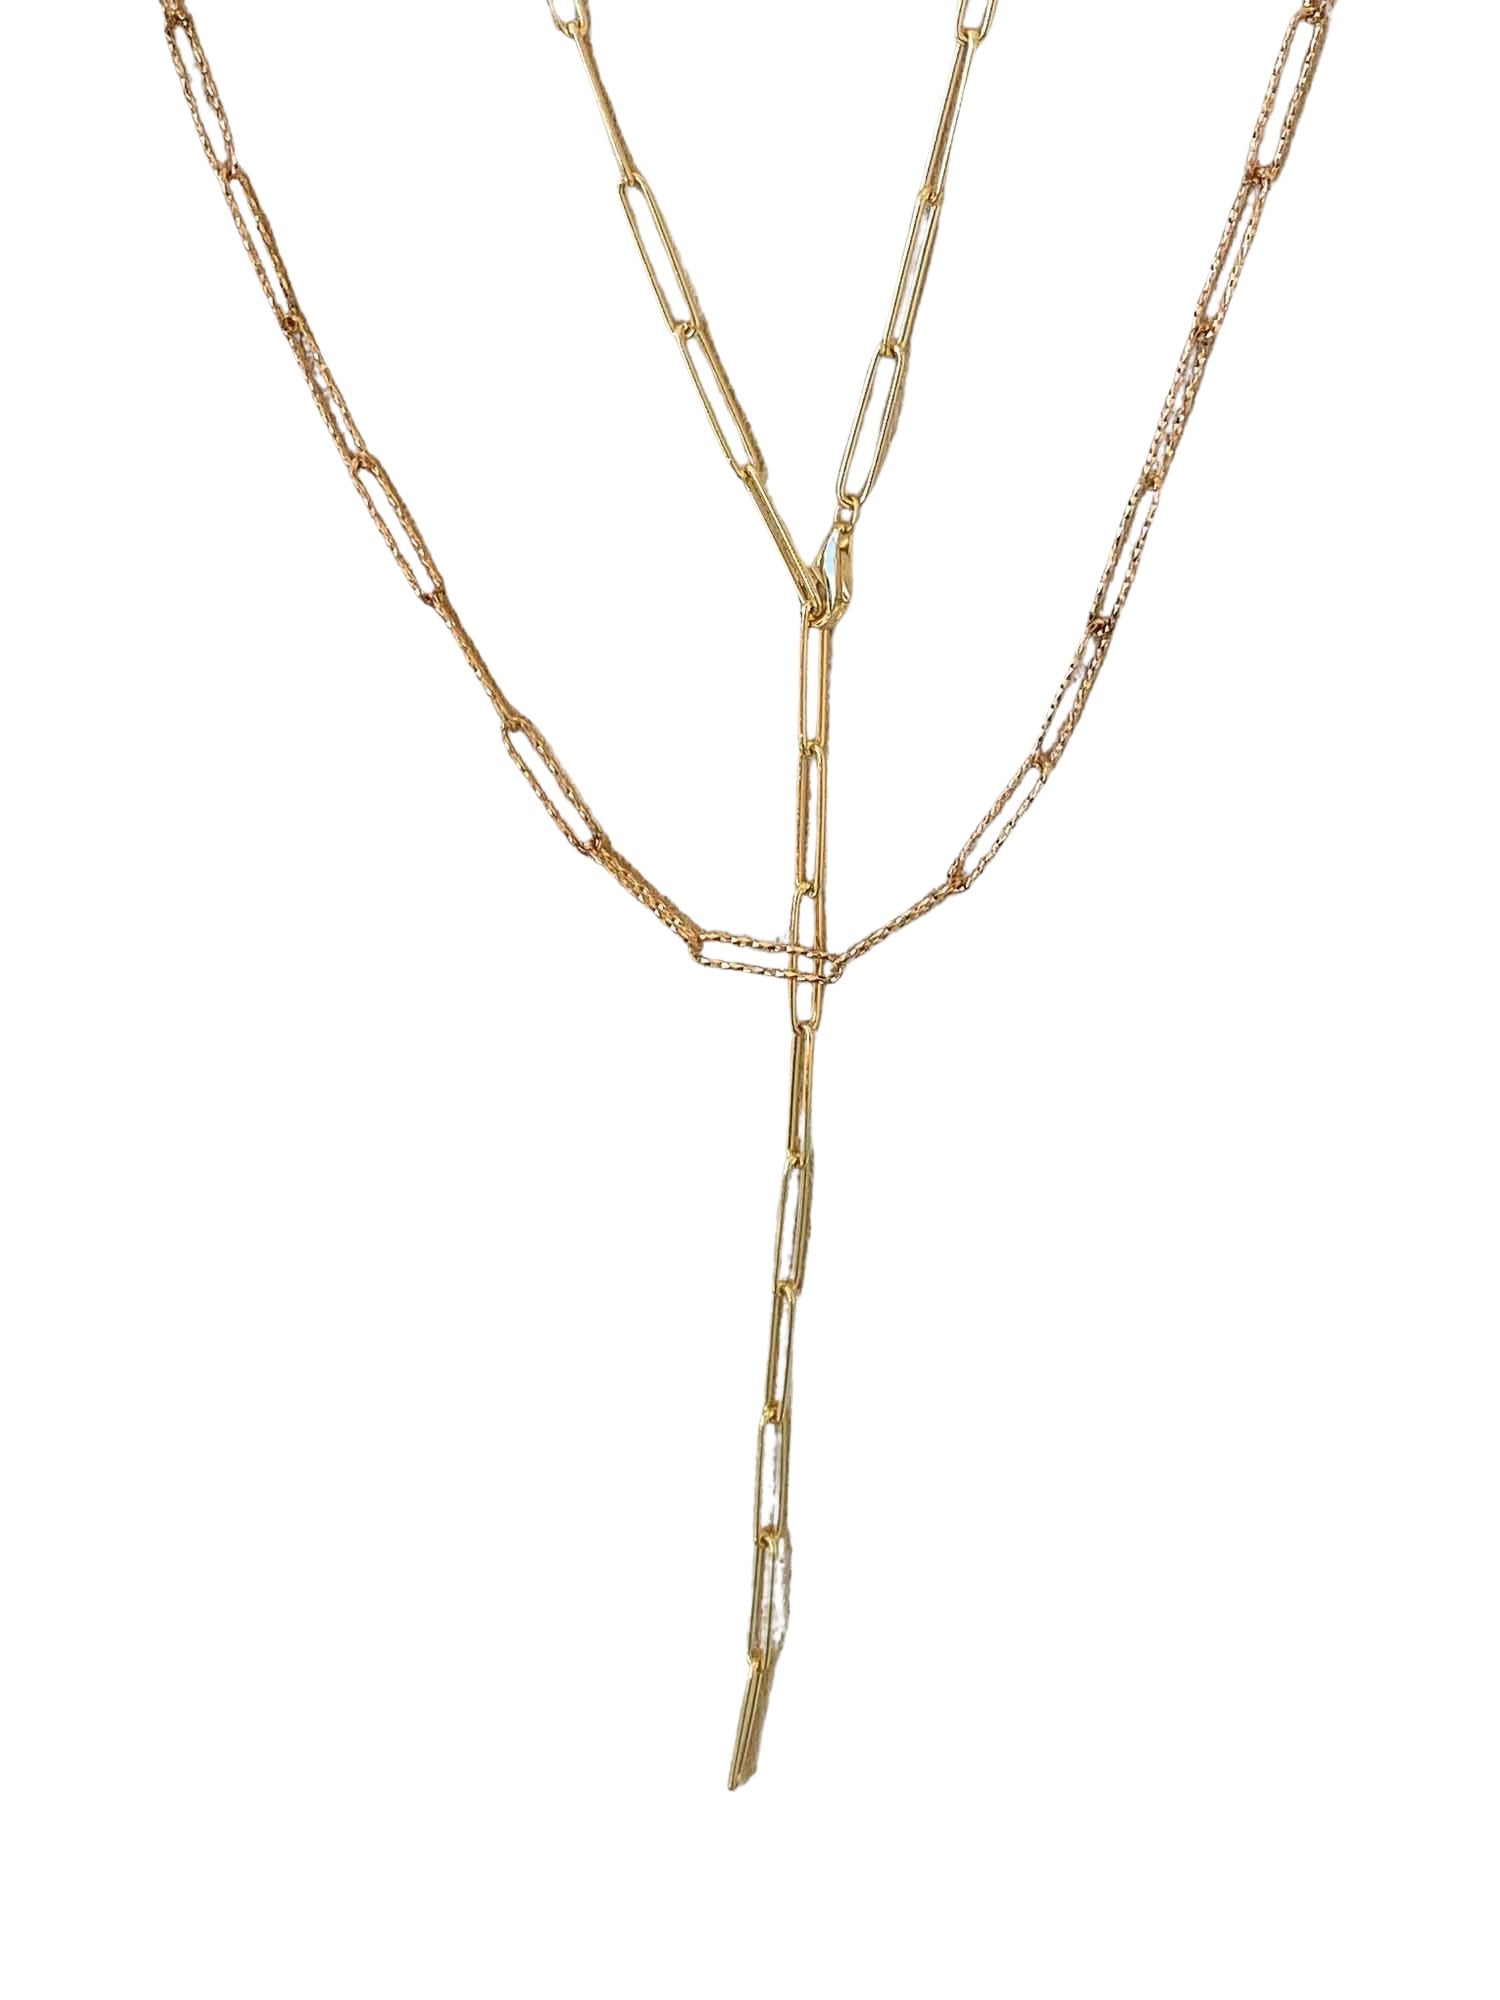 Aurora Designer - 14K Gold Necklace Chain Adjustable Length with